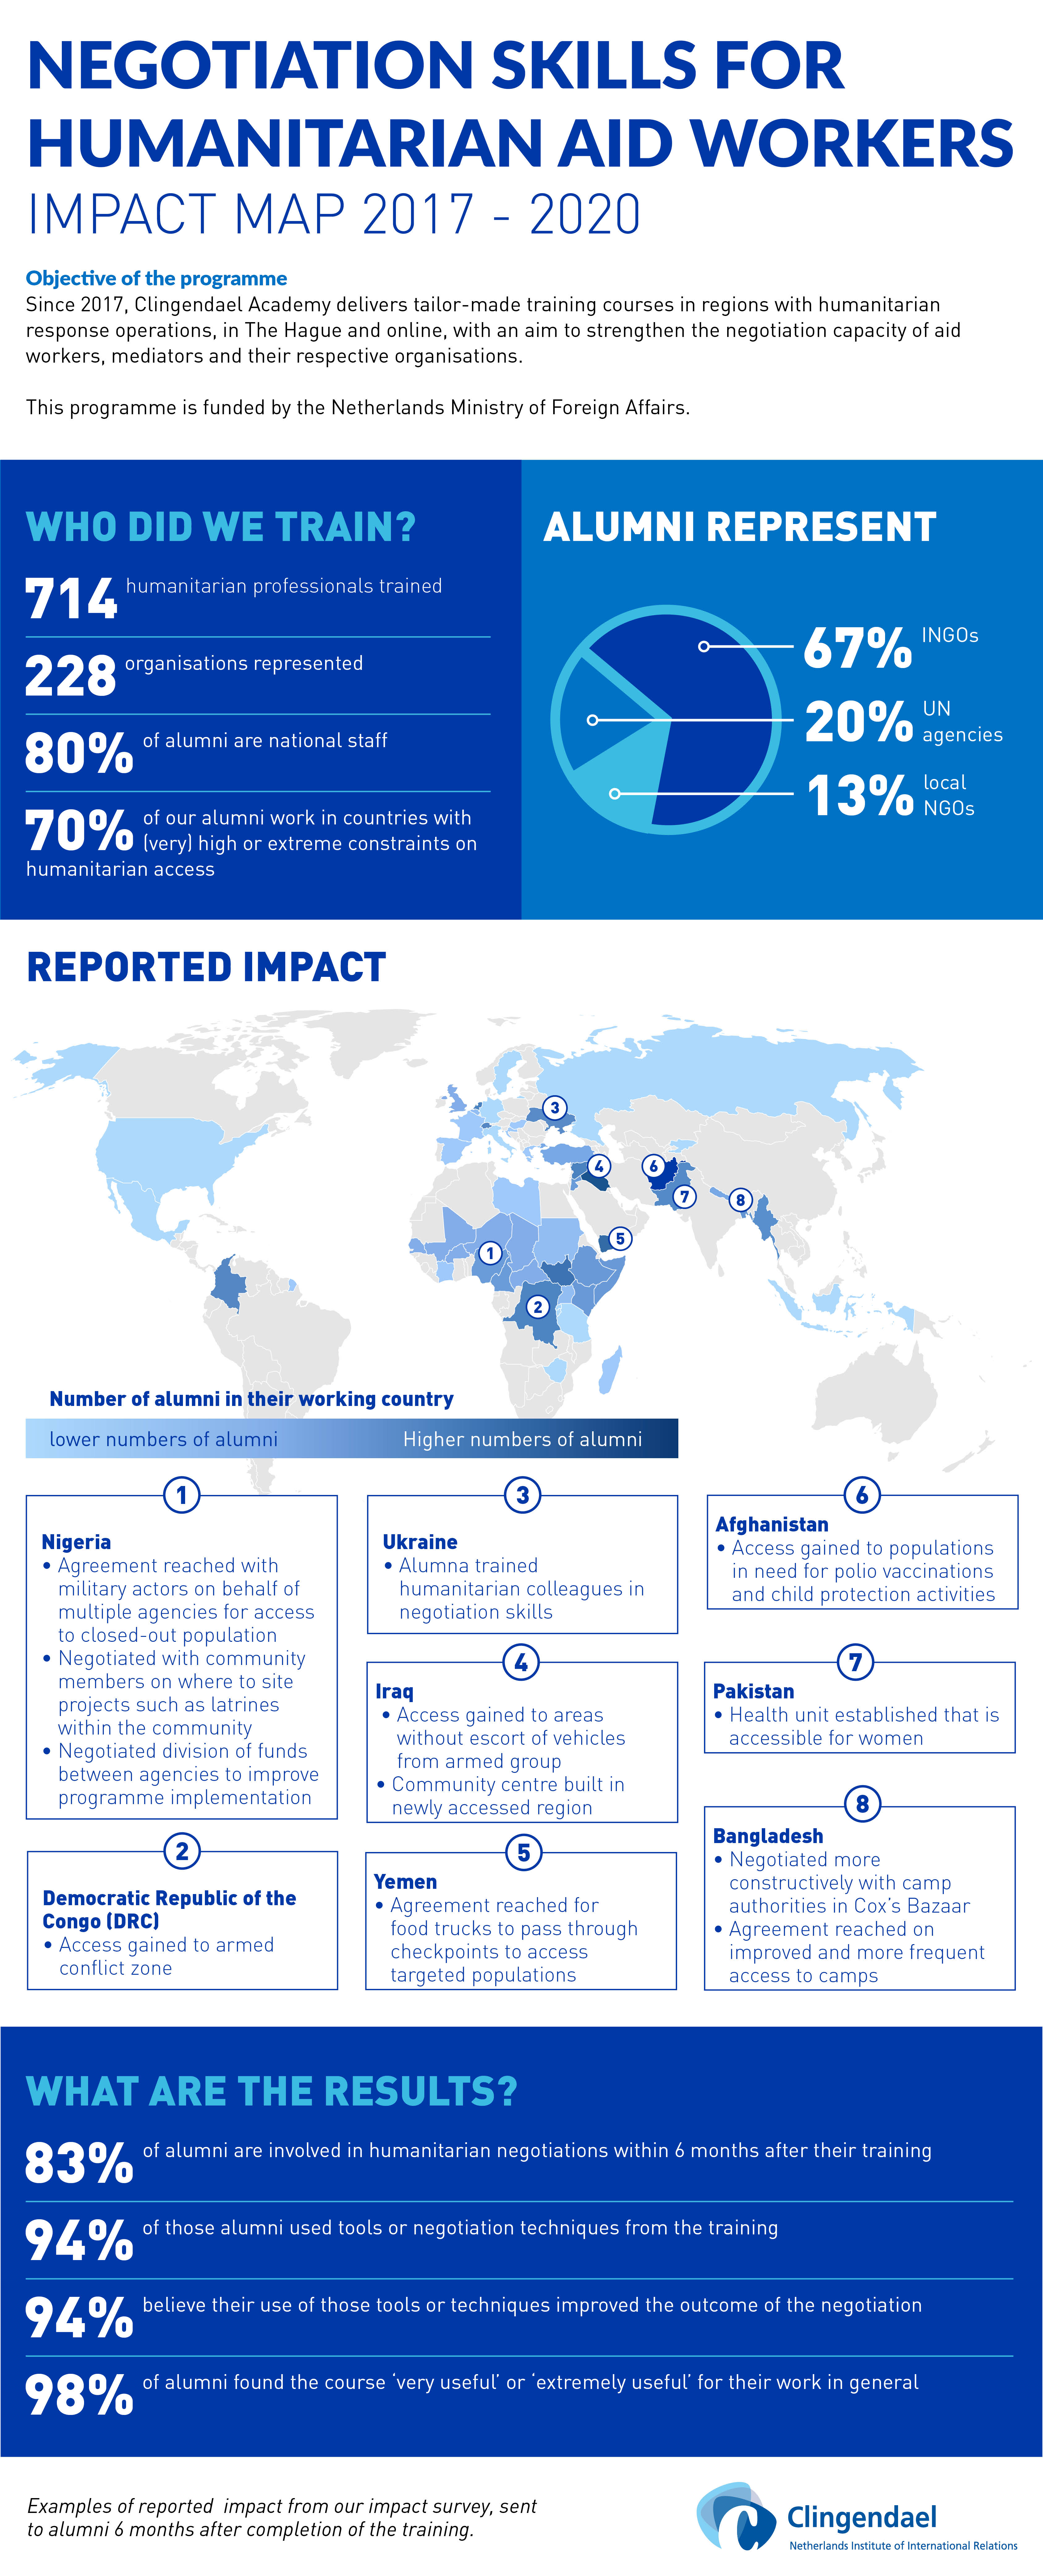 Humanitarian negotiation impact map